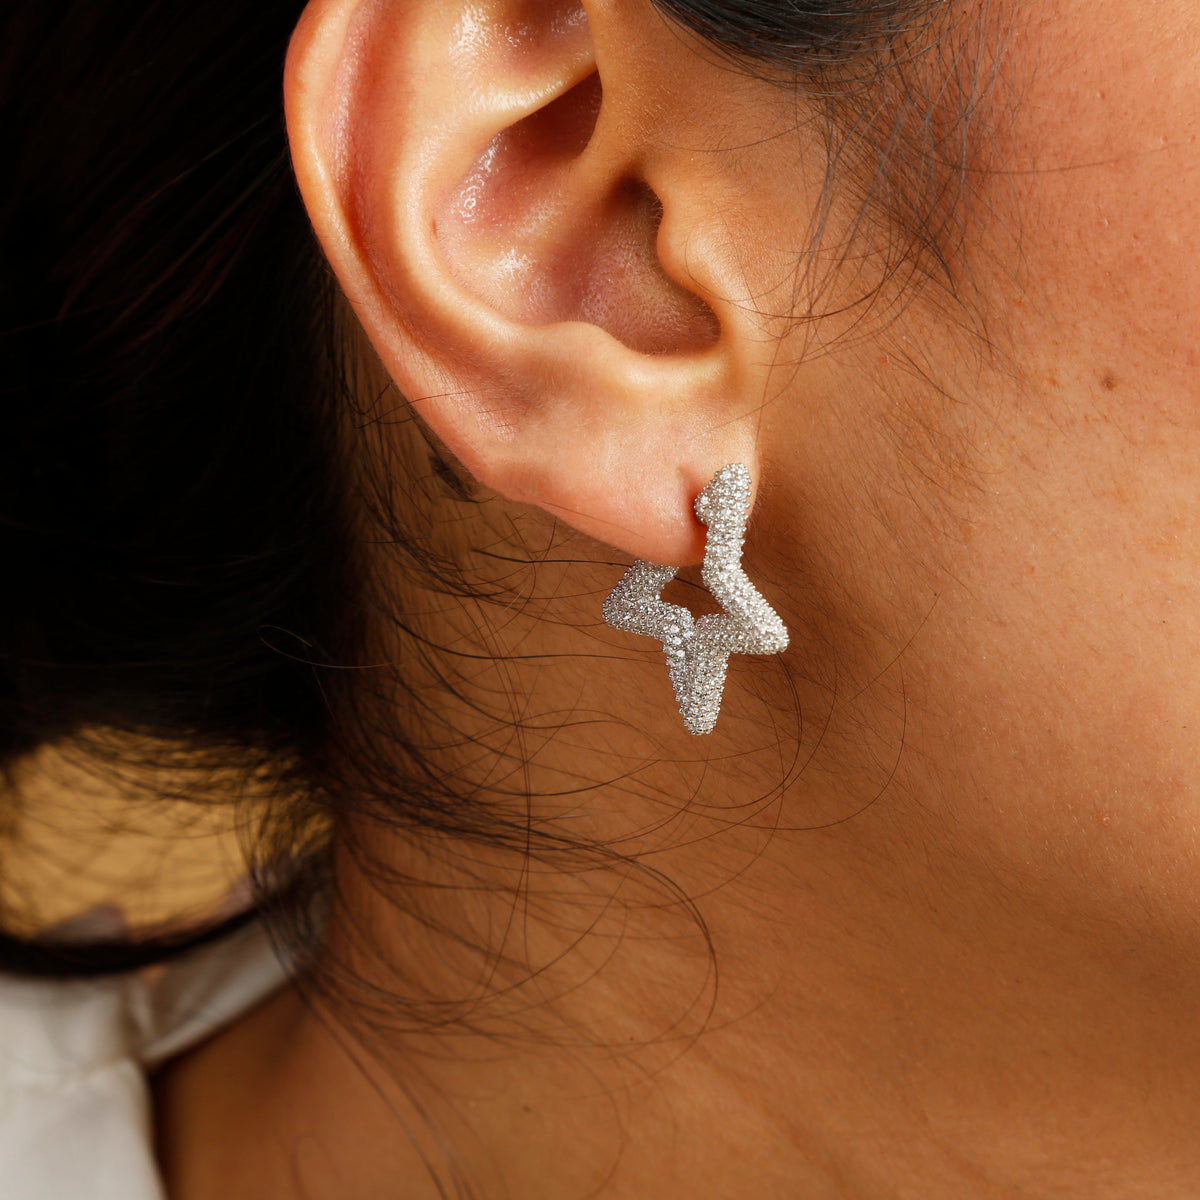 Starry Sparkle Clip-on Stud Earrings